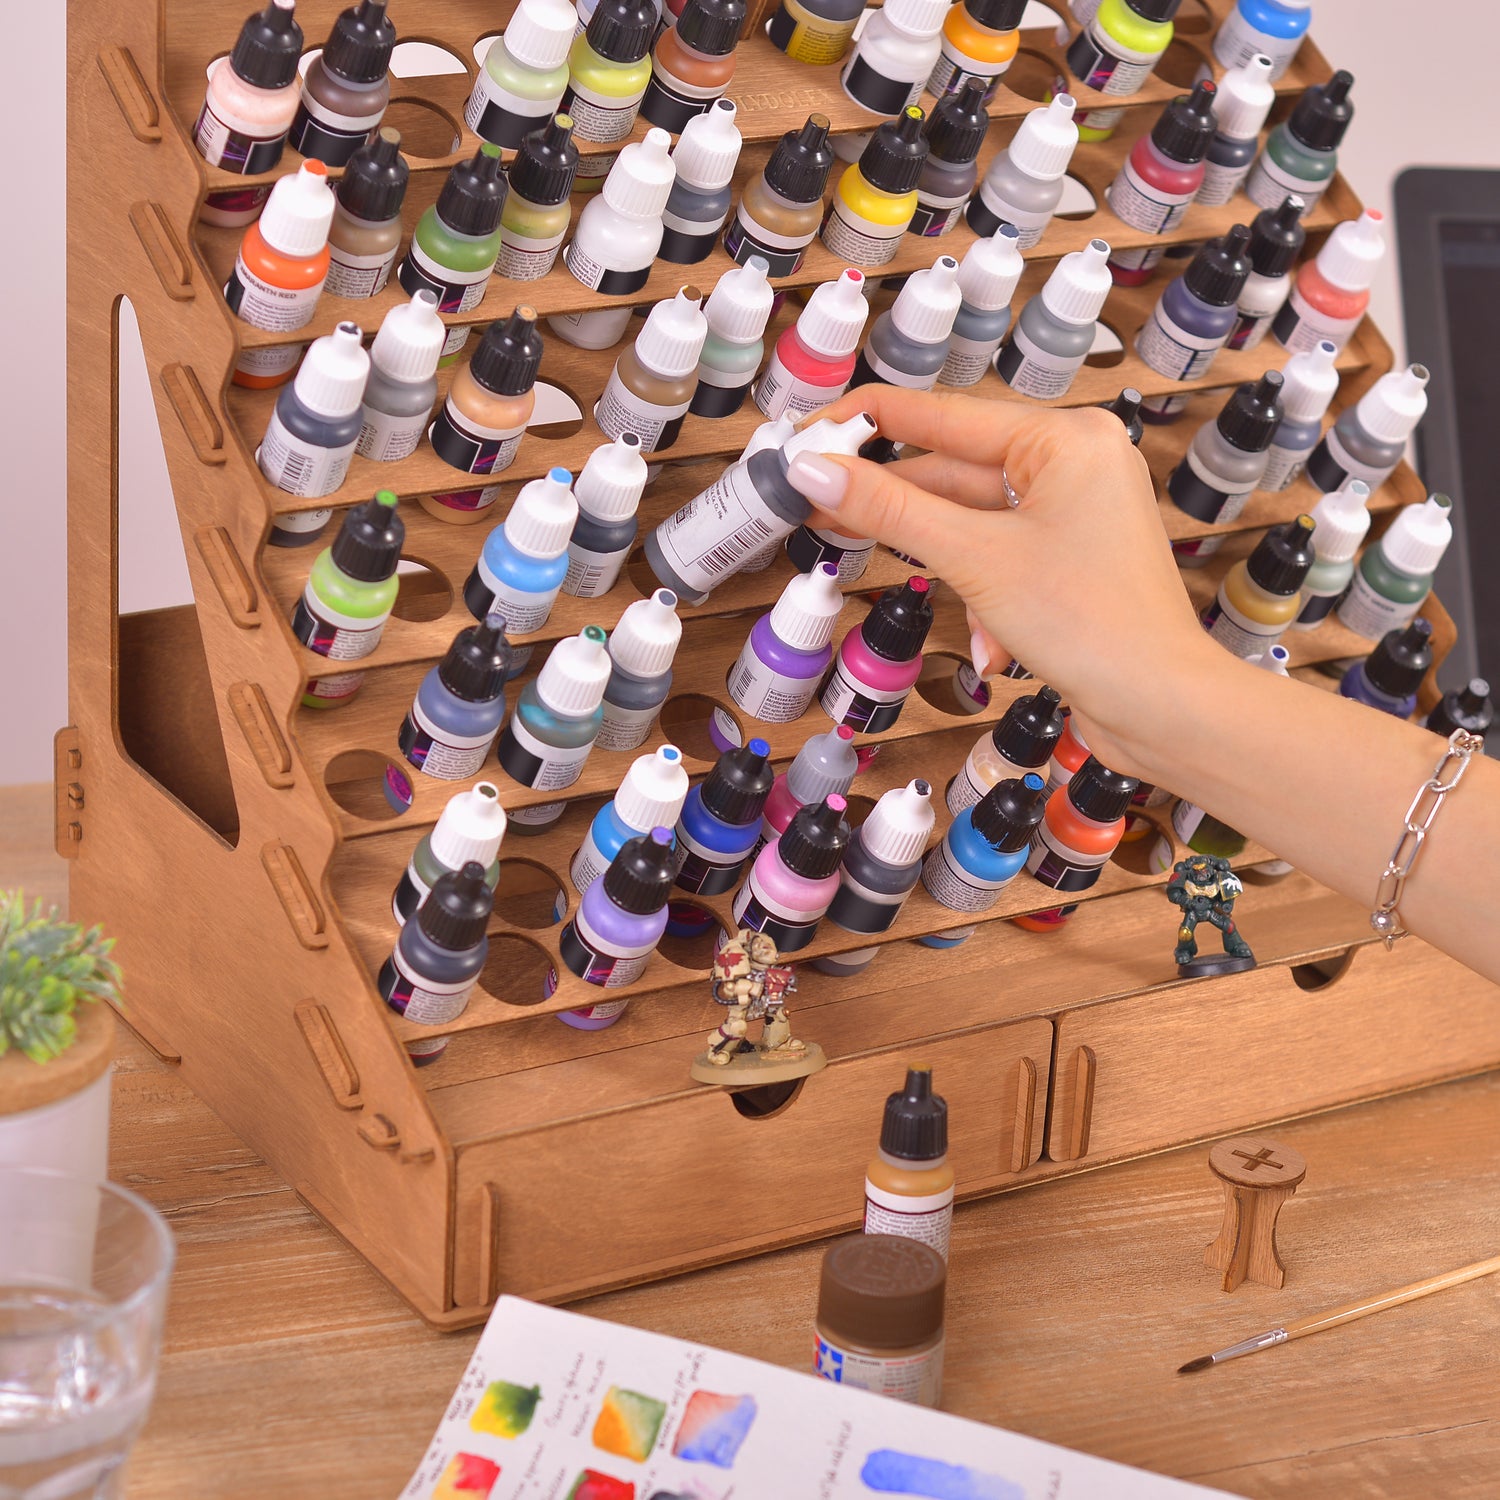 Plydolex Tamiya Paint Rack Organizer with 54 Holes for Miniature